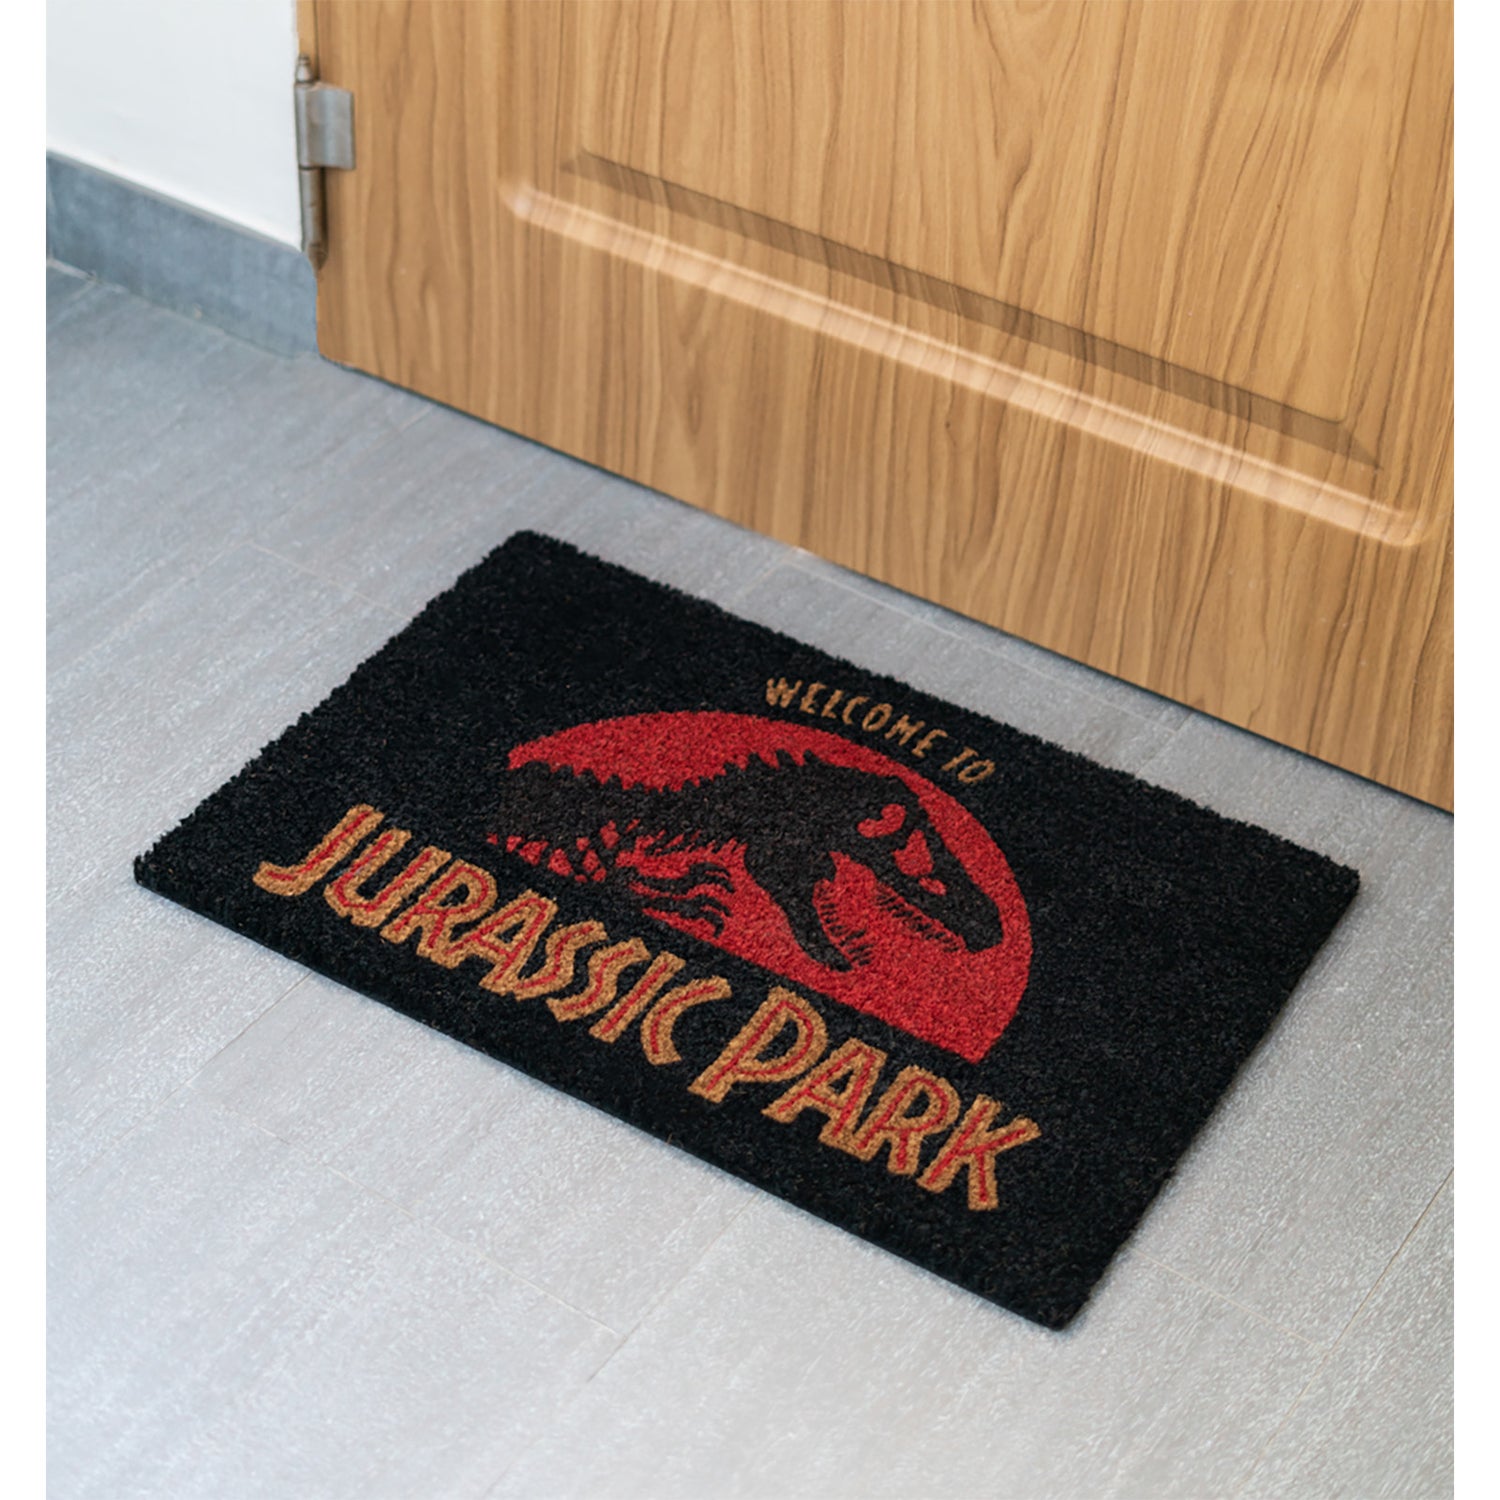 Jurassic Park Door Mat